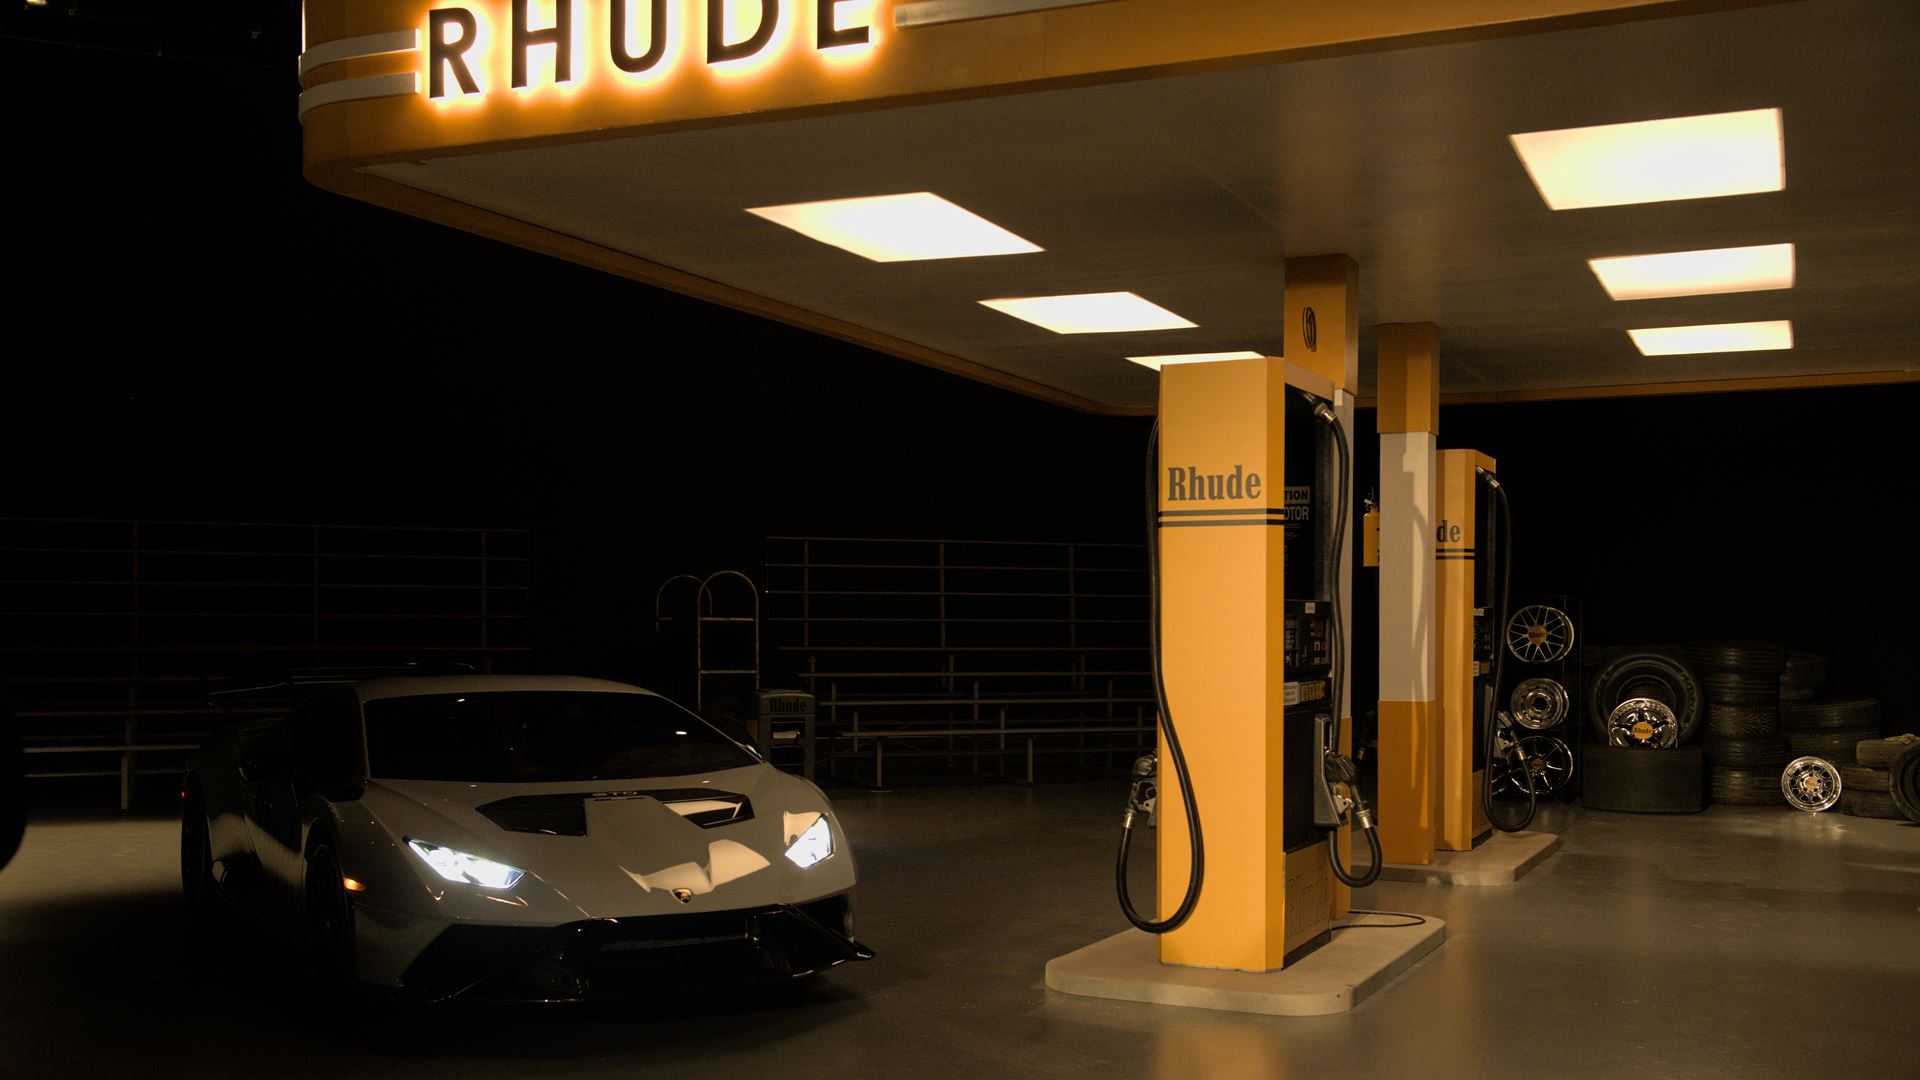 Automobili Lamborghini and Rhude in Los Angeles